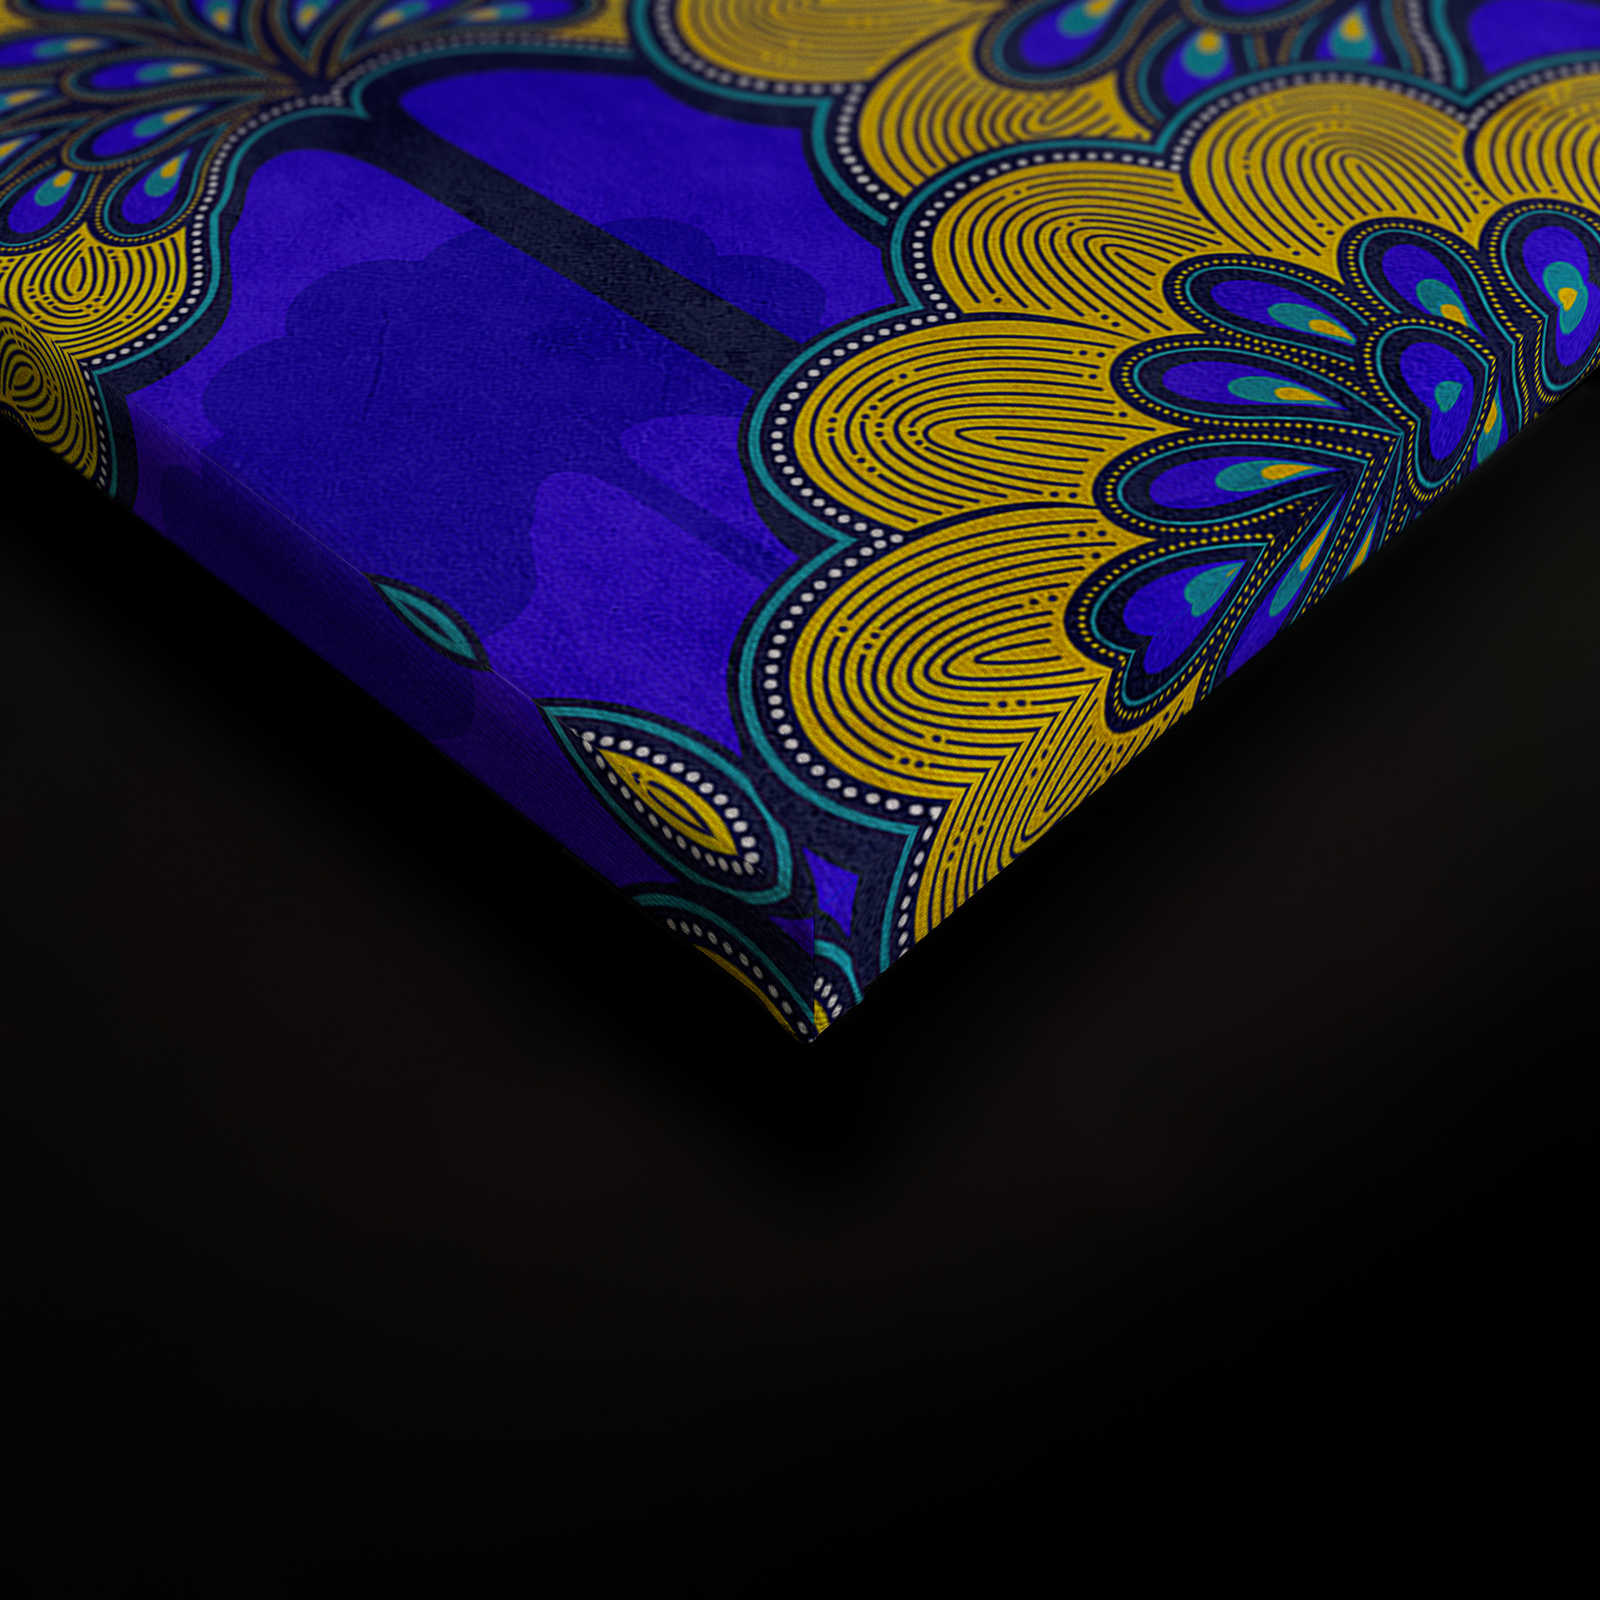             Dakar 1 - Leinwandbild Afrikanisches Stoff Muster Blau & Gelb – 1,20 m x 0,80 m
        